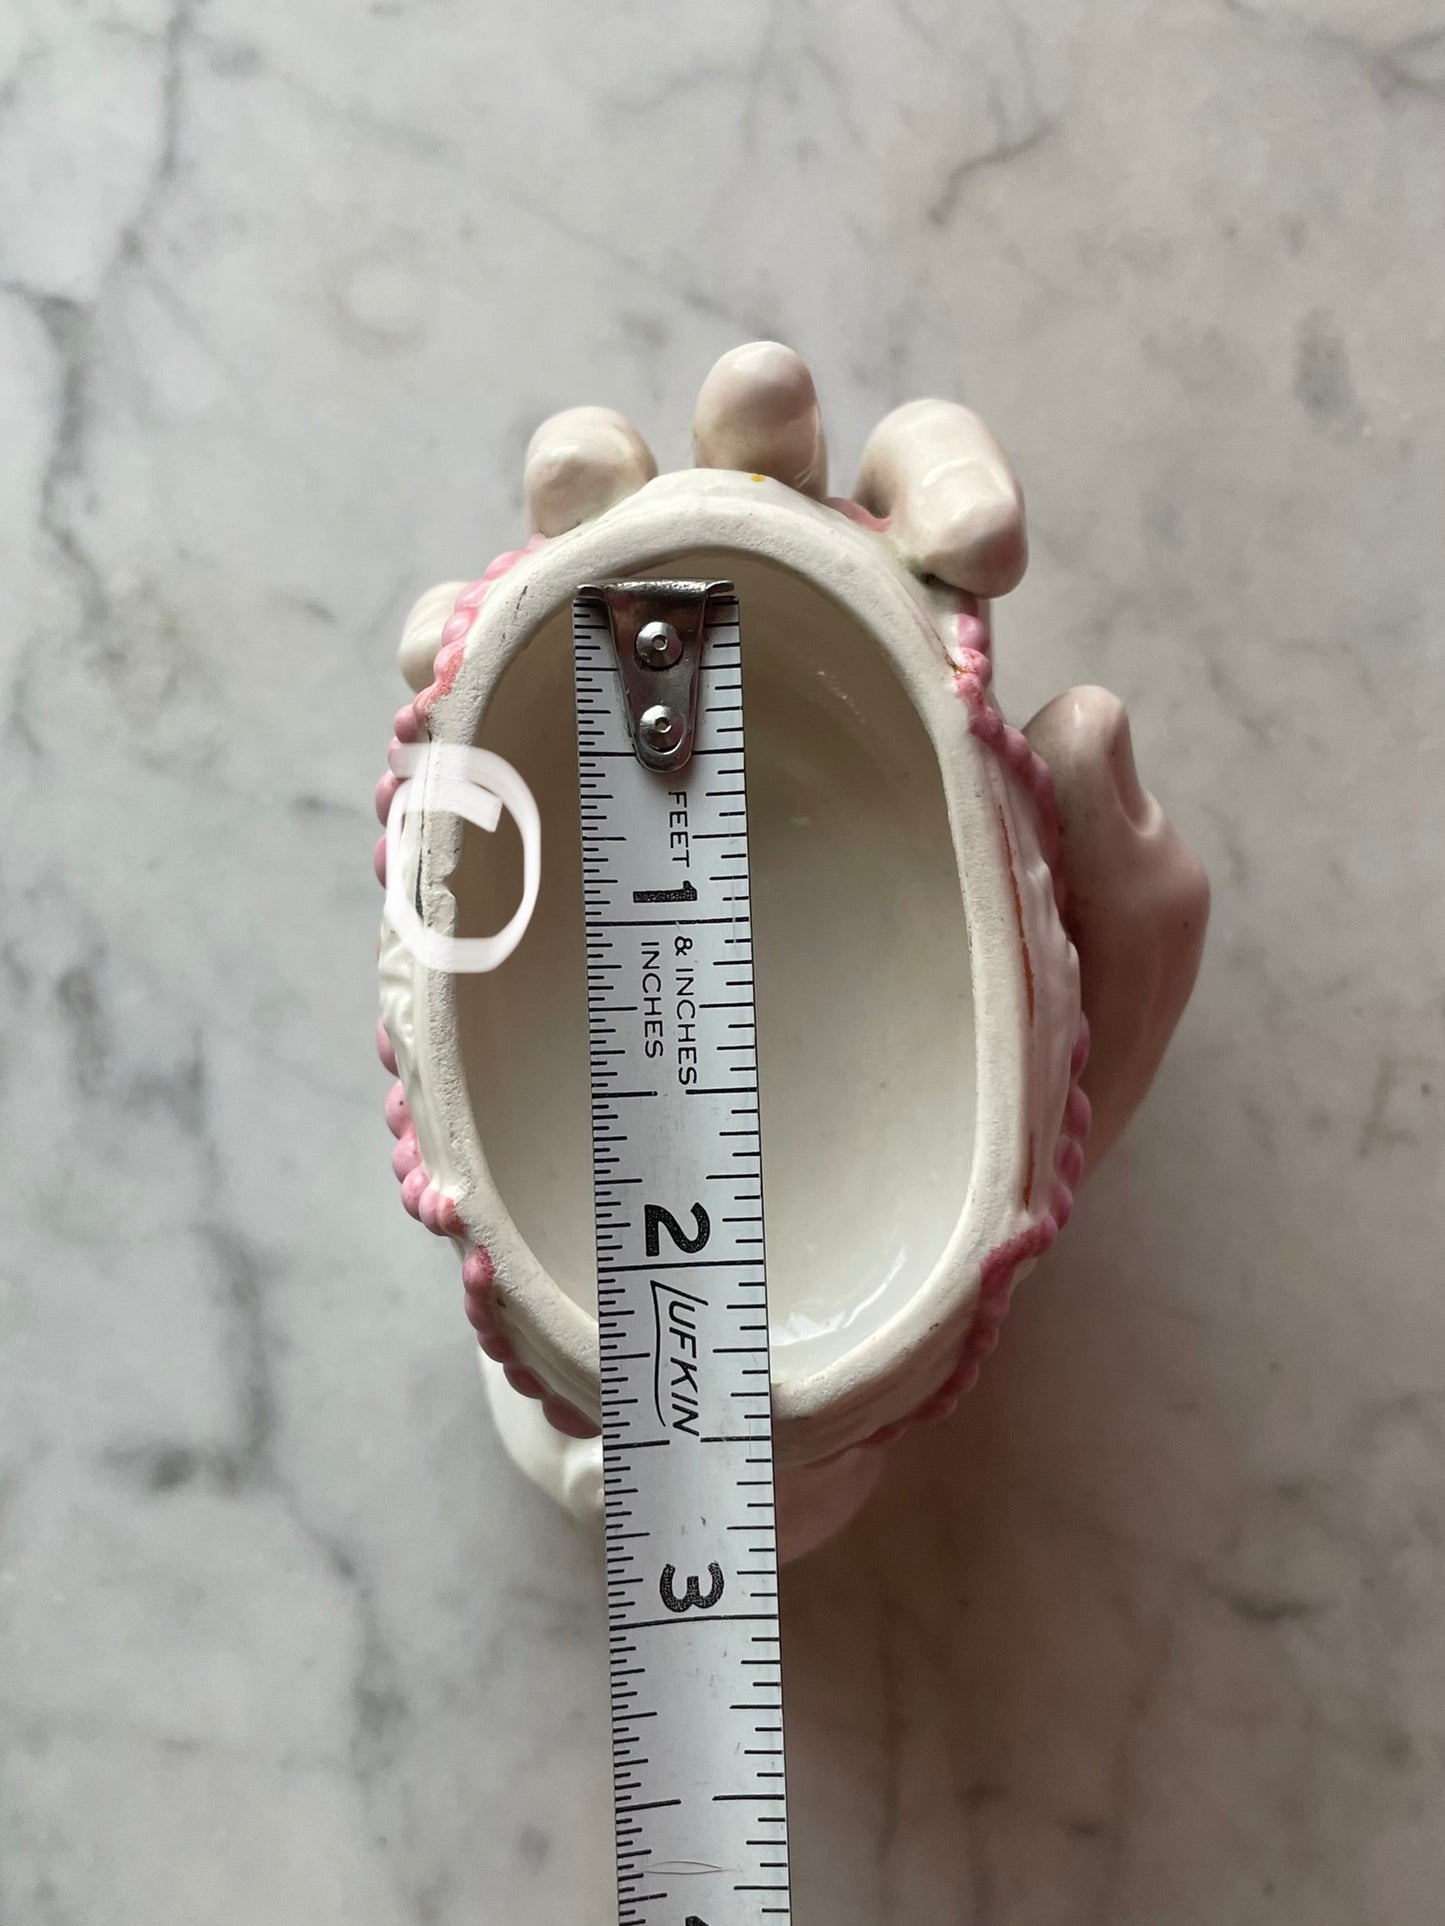 Victorian Porcelain Hand Shaped Vessel - Conta & Boehme or Fairing Box